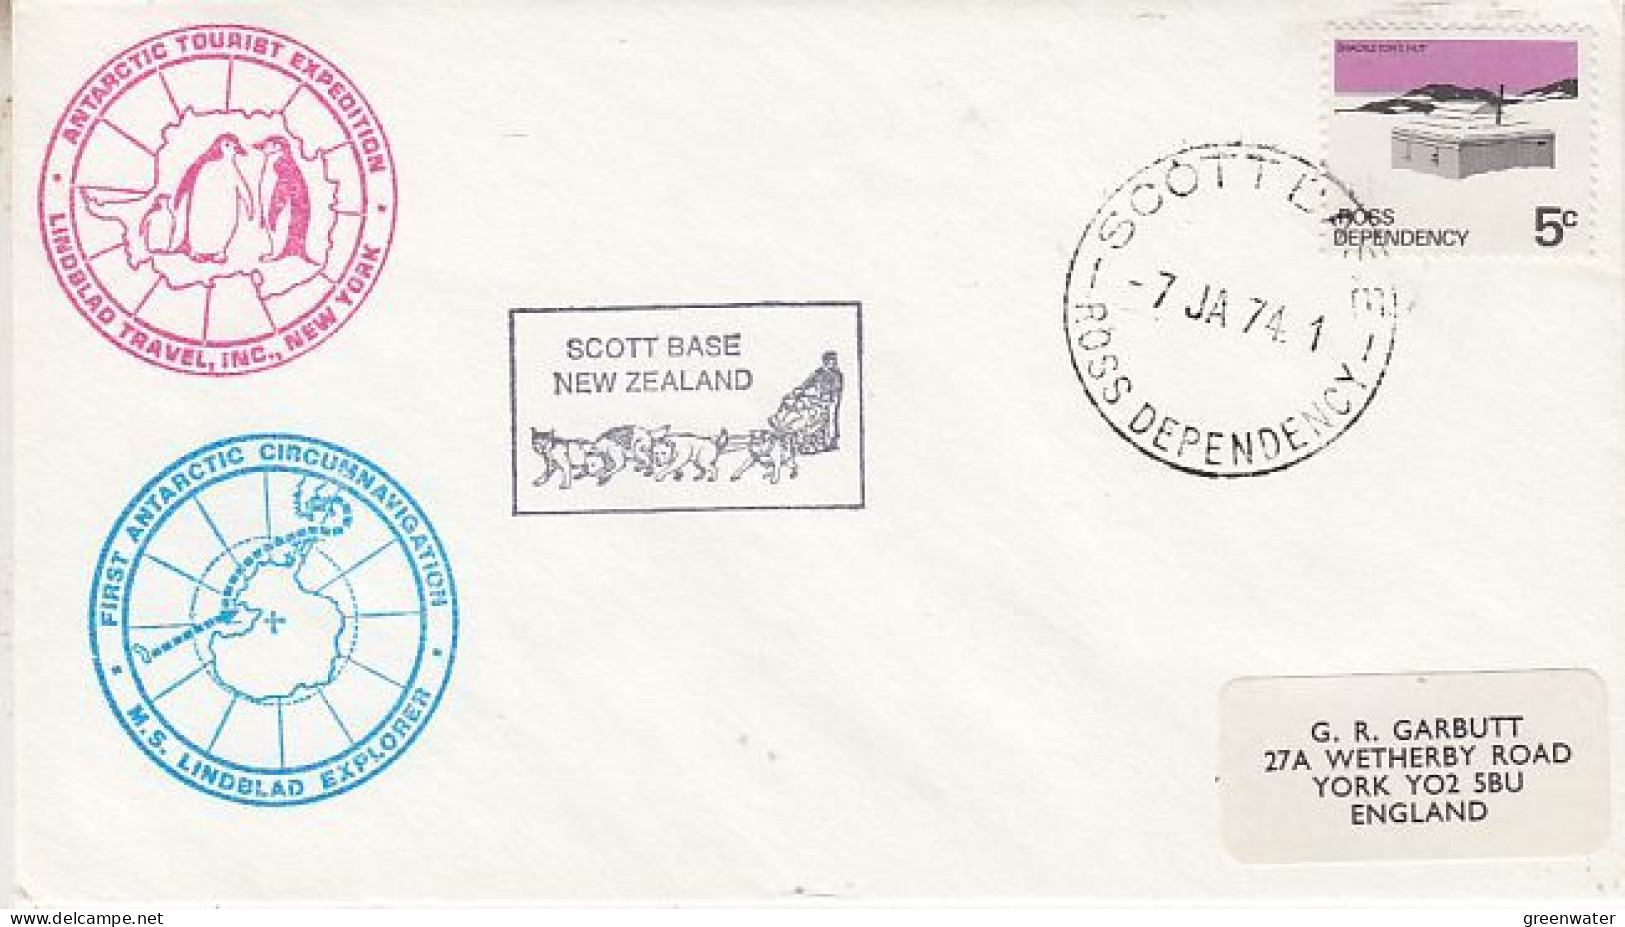 Ross Dependency Lindblad Travel 1st Antarctic Circummavigation Ca Scott Base 7 JA 1974 (RT224) - Briefe U. Dokumente